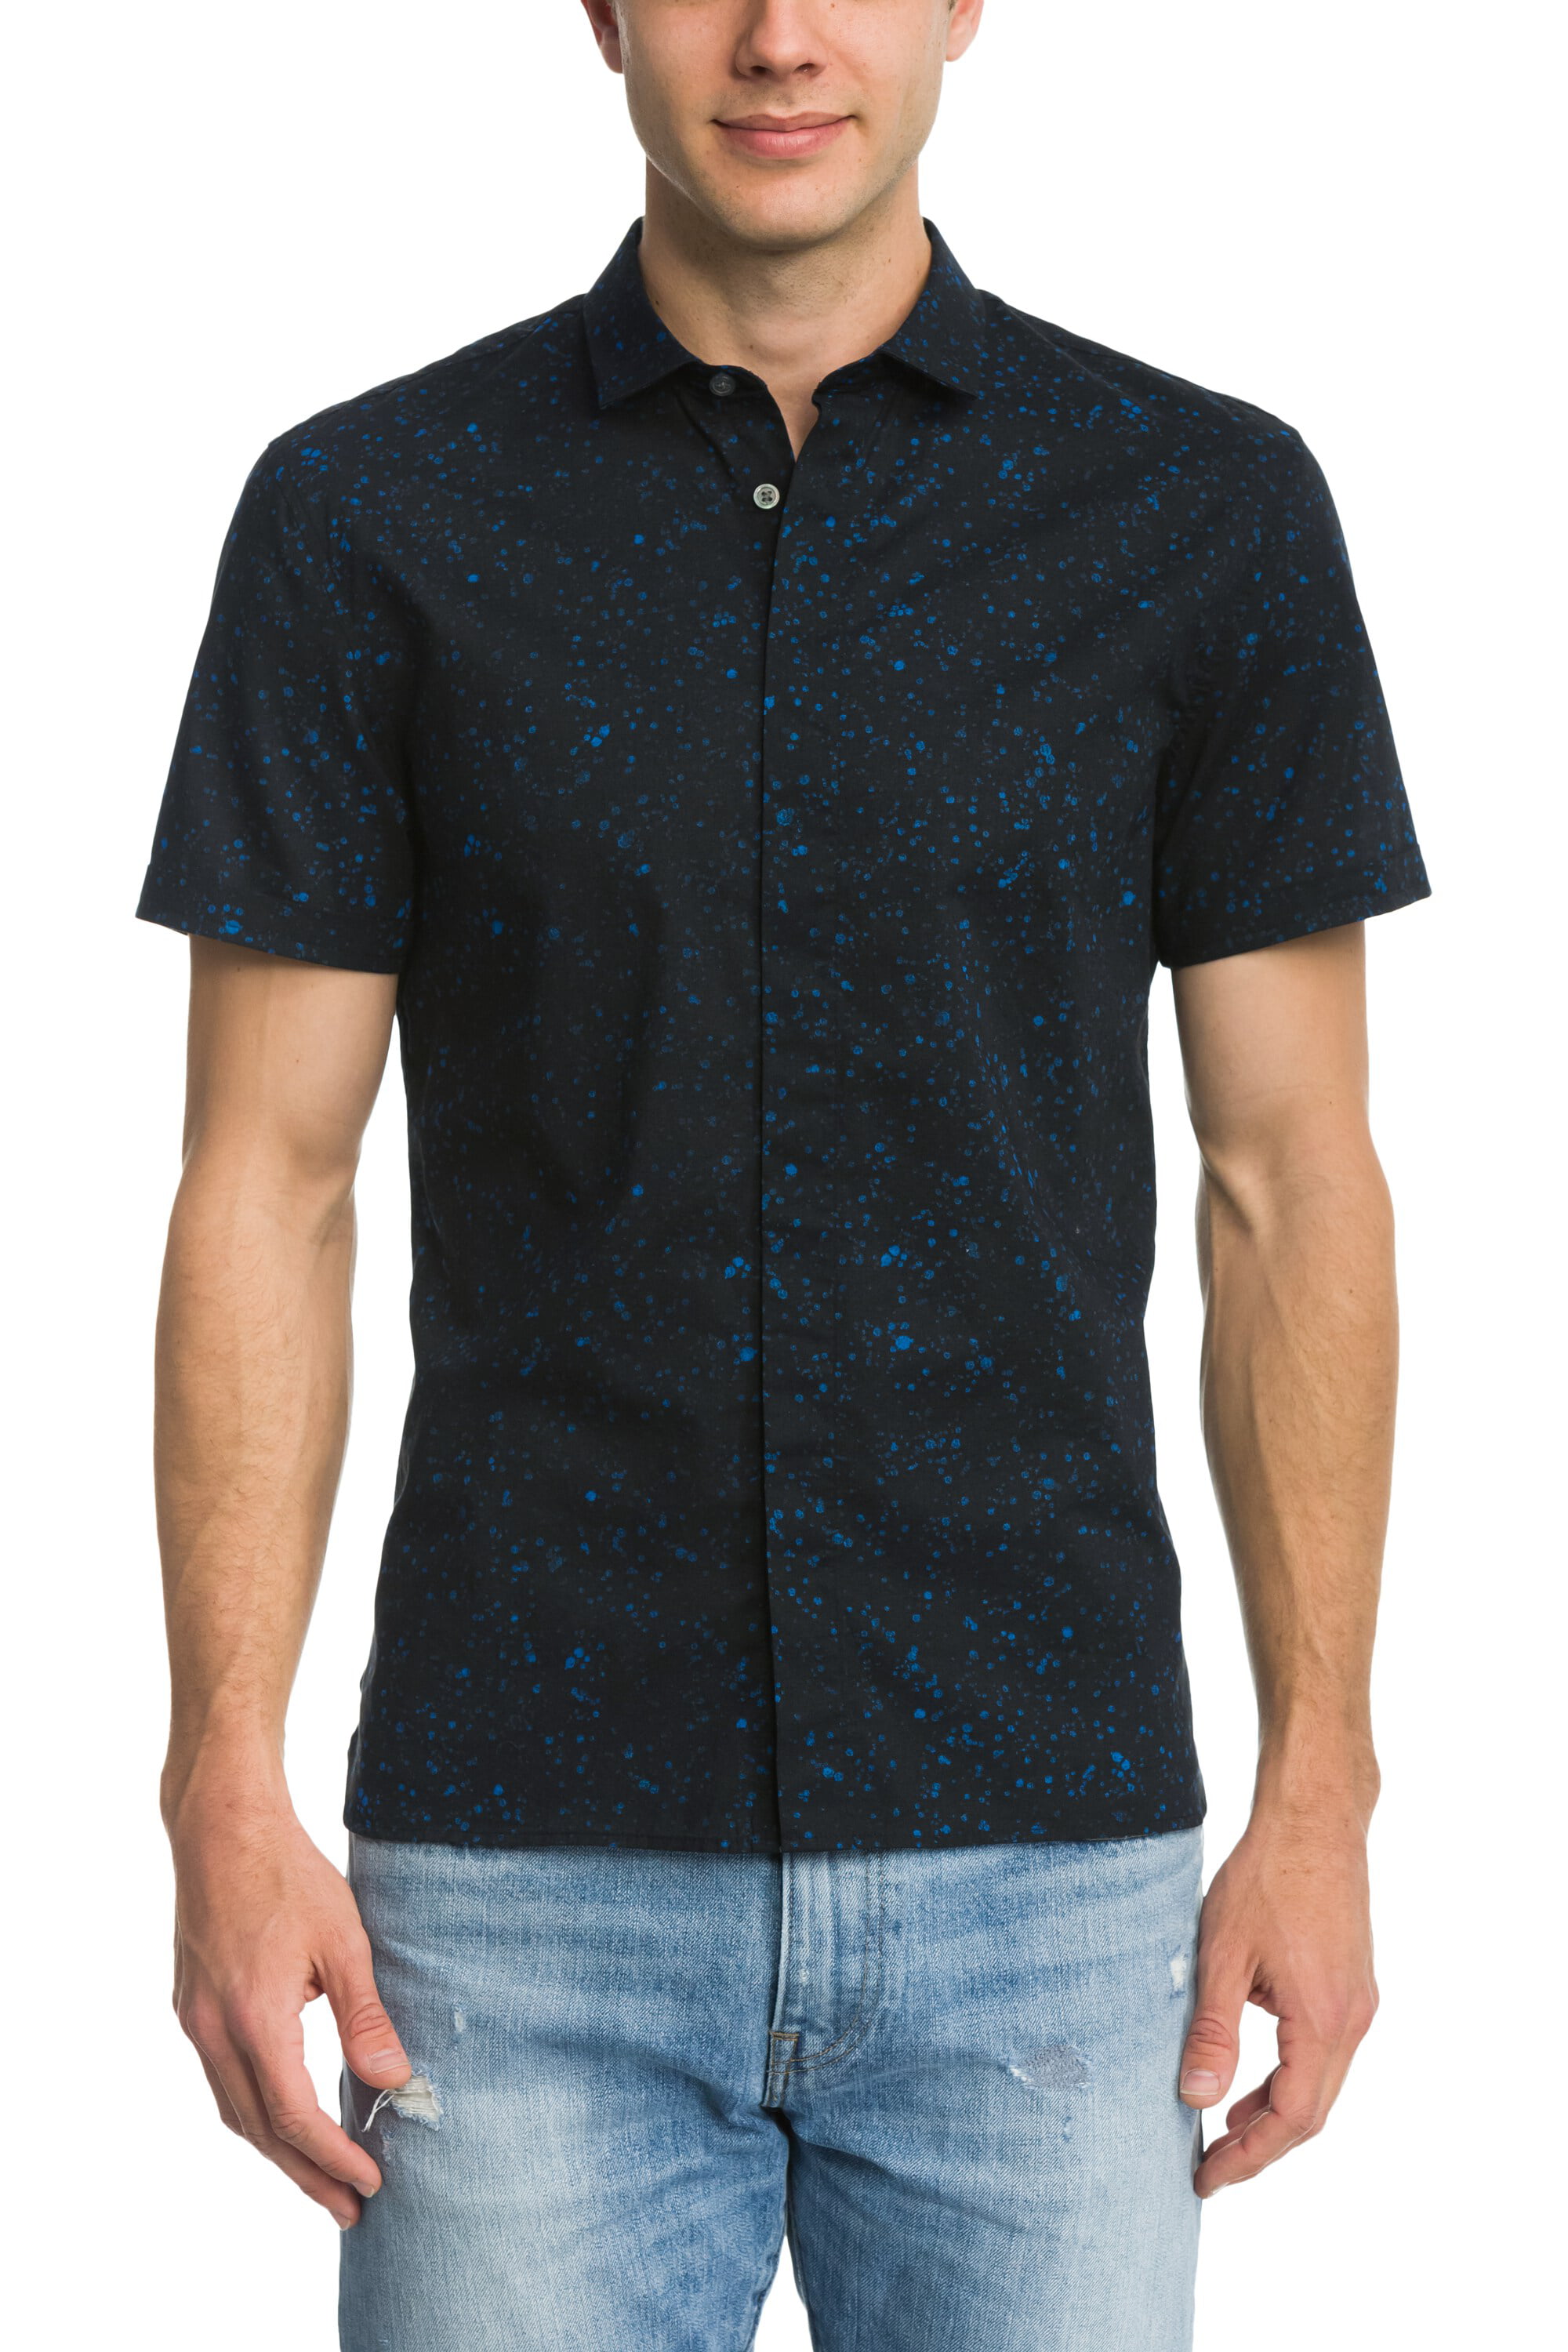 US X-Large John Varvatos MINERAL BLACK Loren Slim Fit Short Sleeve Sport Shirt